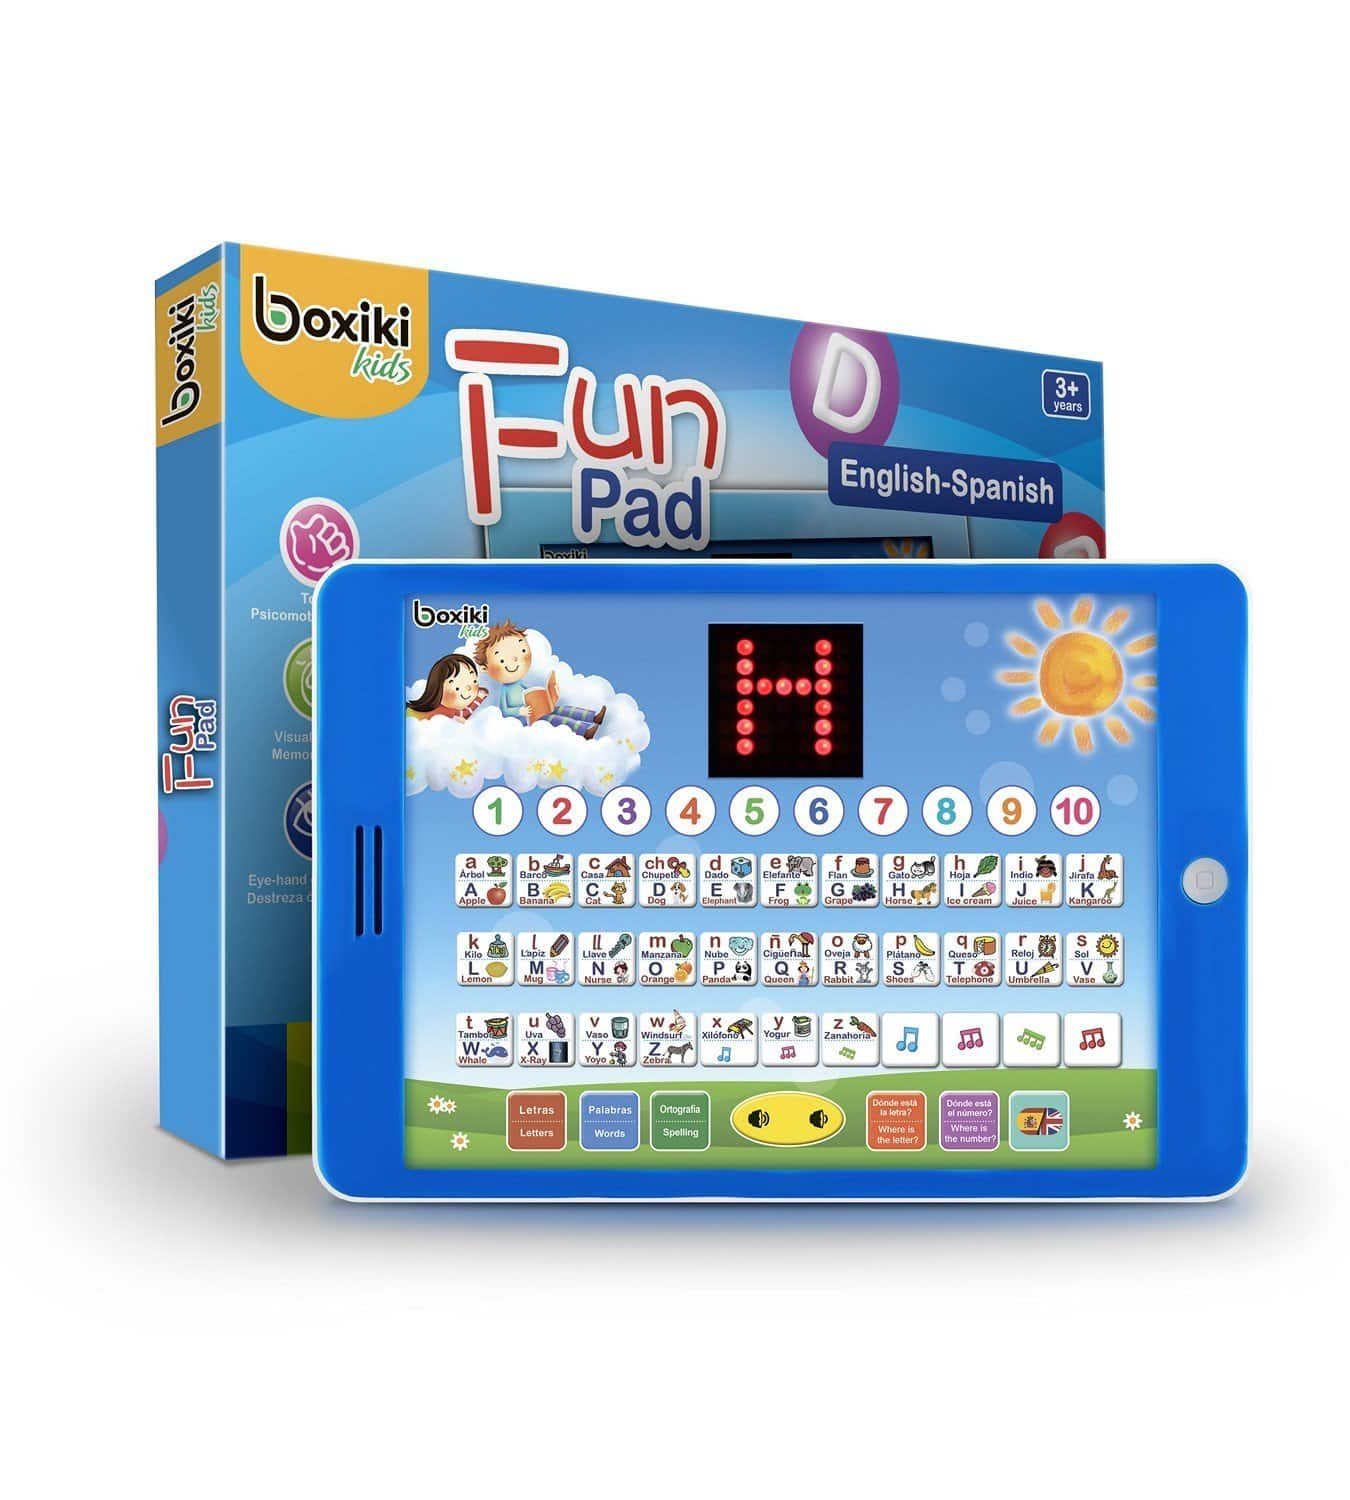 LIGHTNING DEAL ALERT! Spanish-English Tablet Bilingual Educational Toy – 50% off!